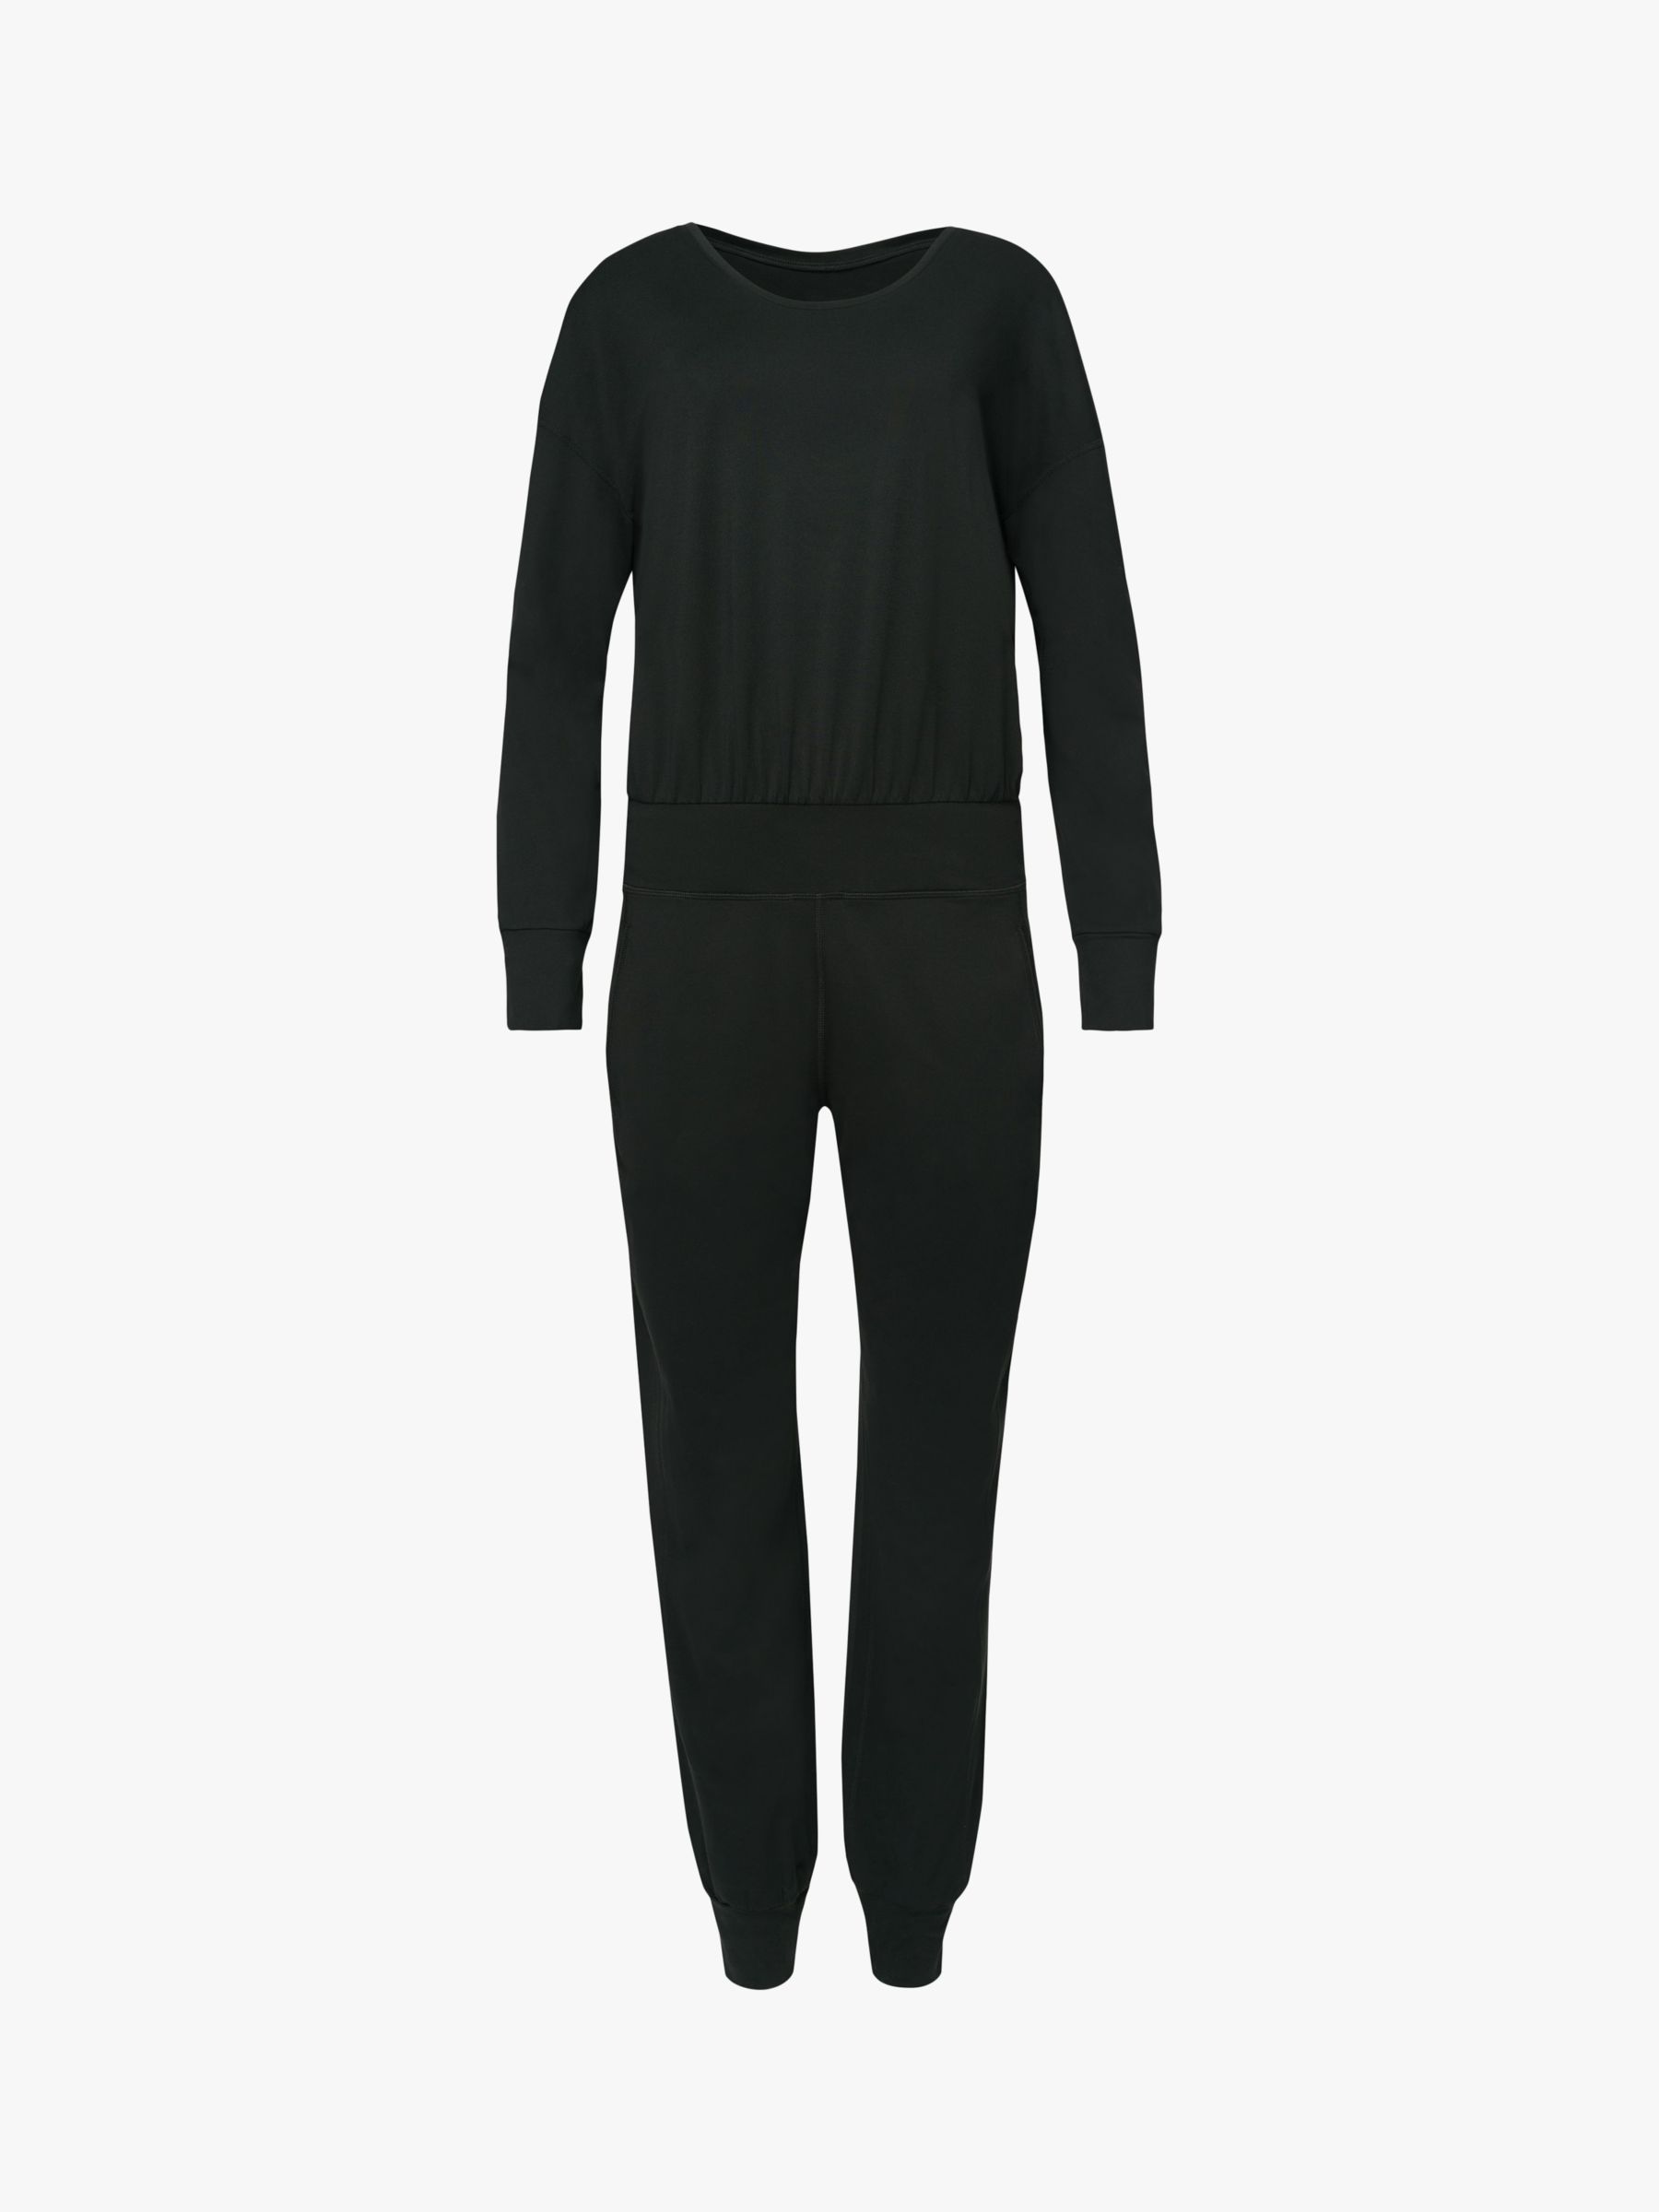 Sweaty Betty Gary Long Sleeve Jumpsuit, Black at John Lewis & Partners